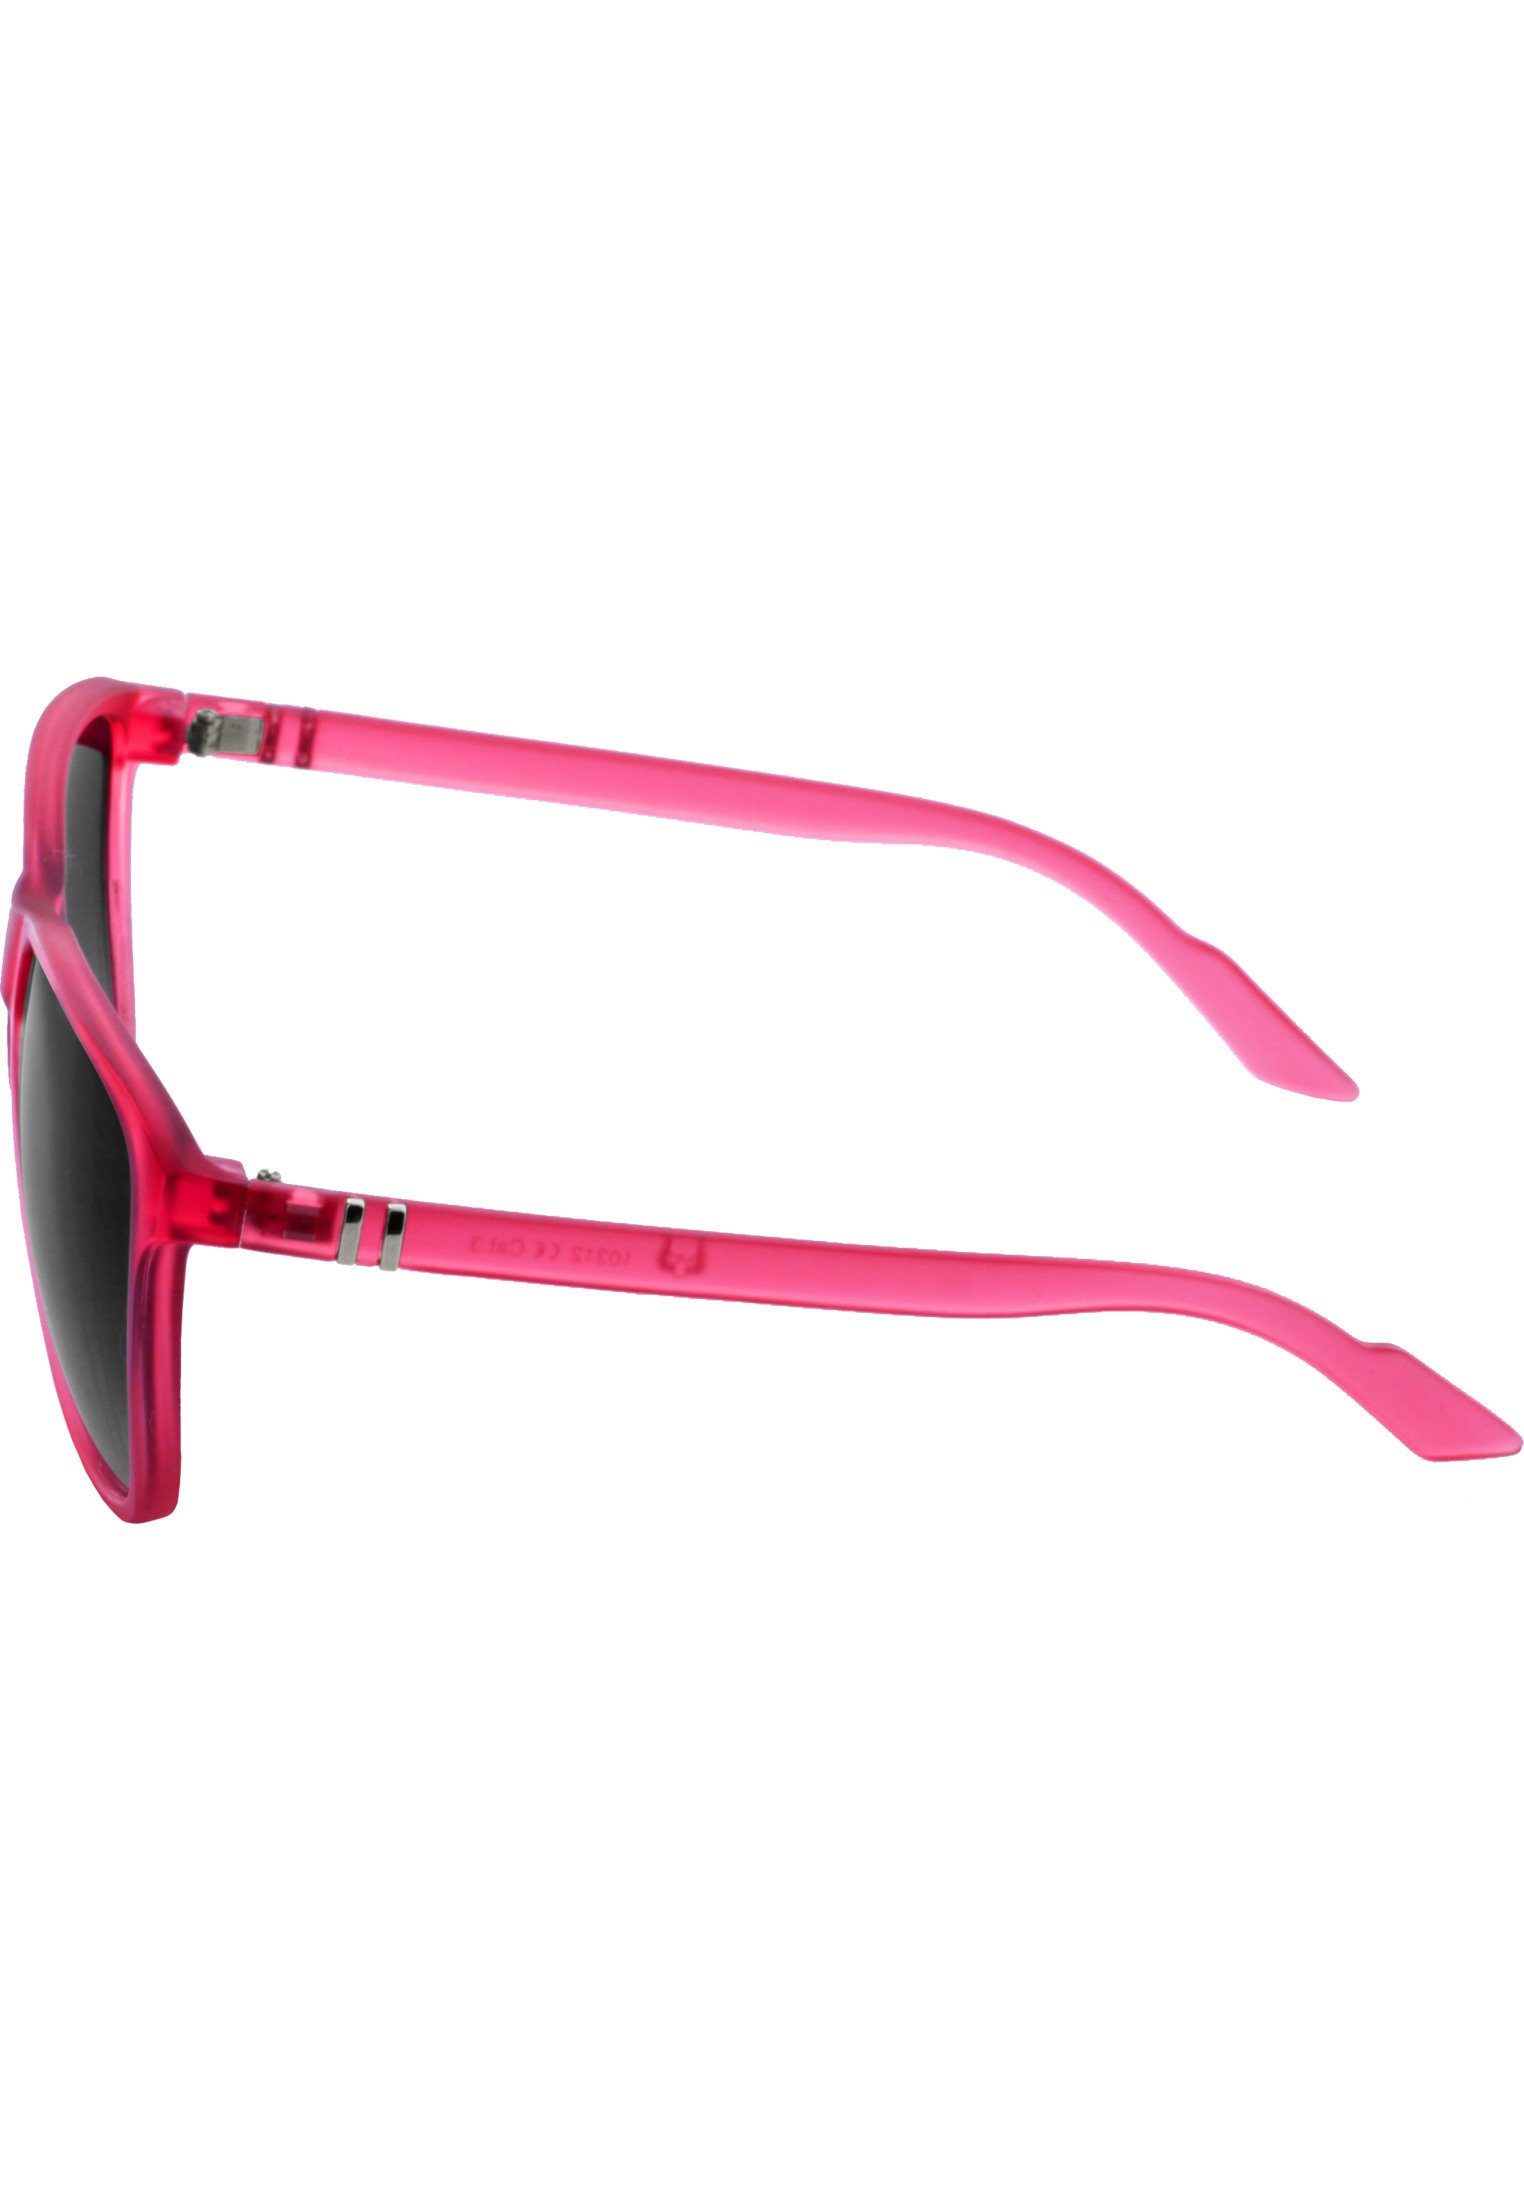 MSTRDS Sonnenbrille Sunglasses neonpink Accessoires Chirwa